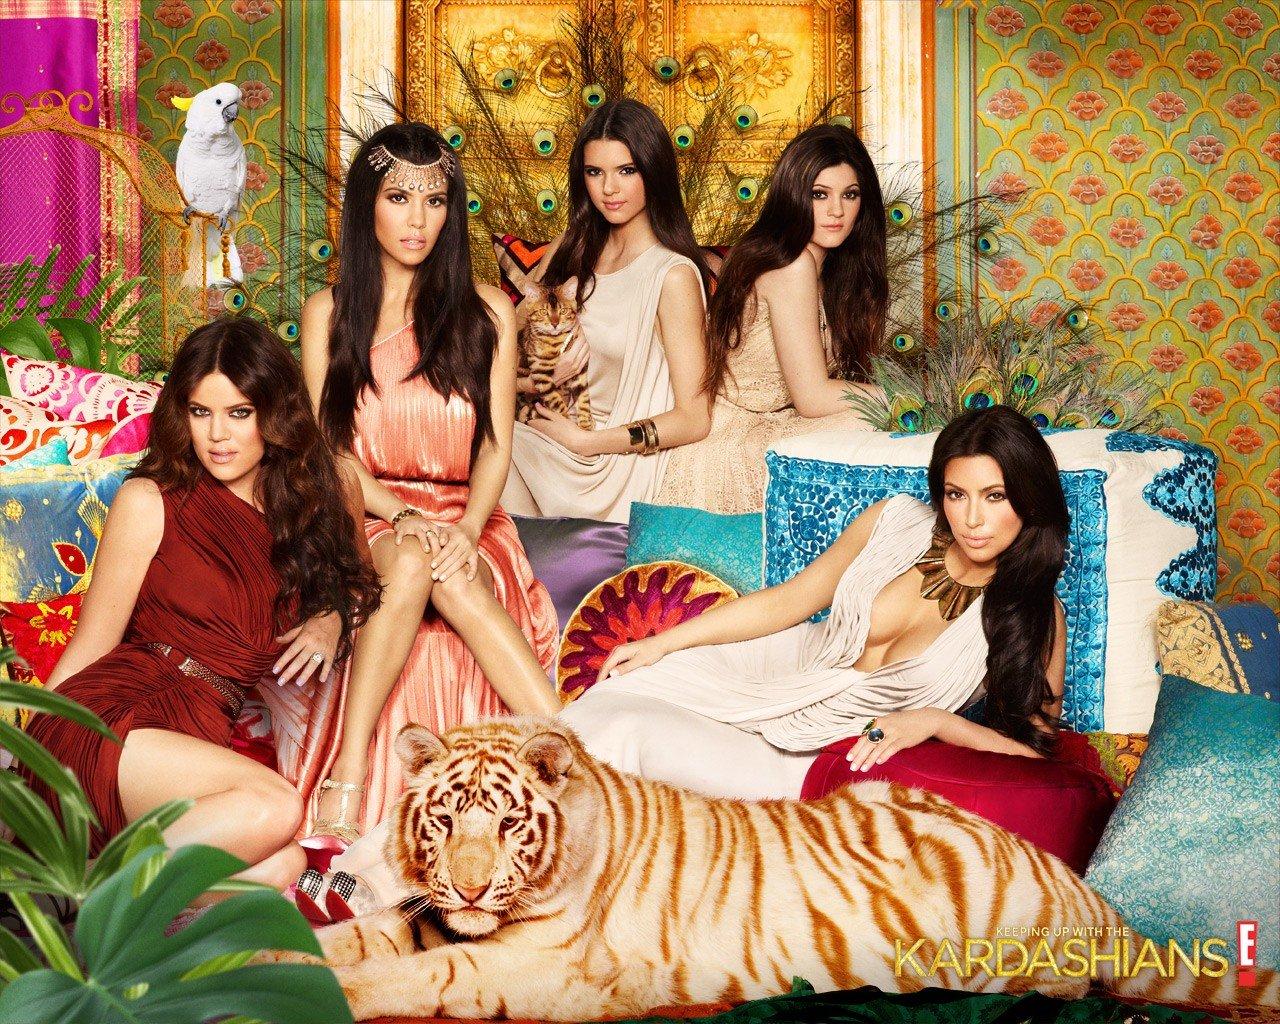 Keeping Up With The Kardashians wallpaperx1024